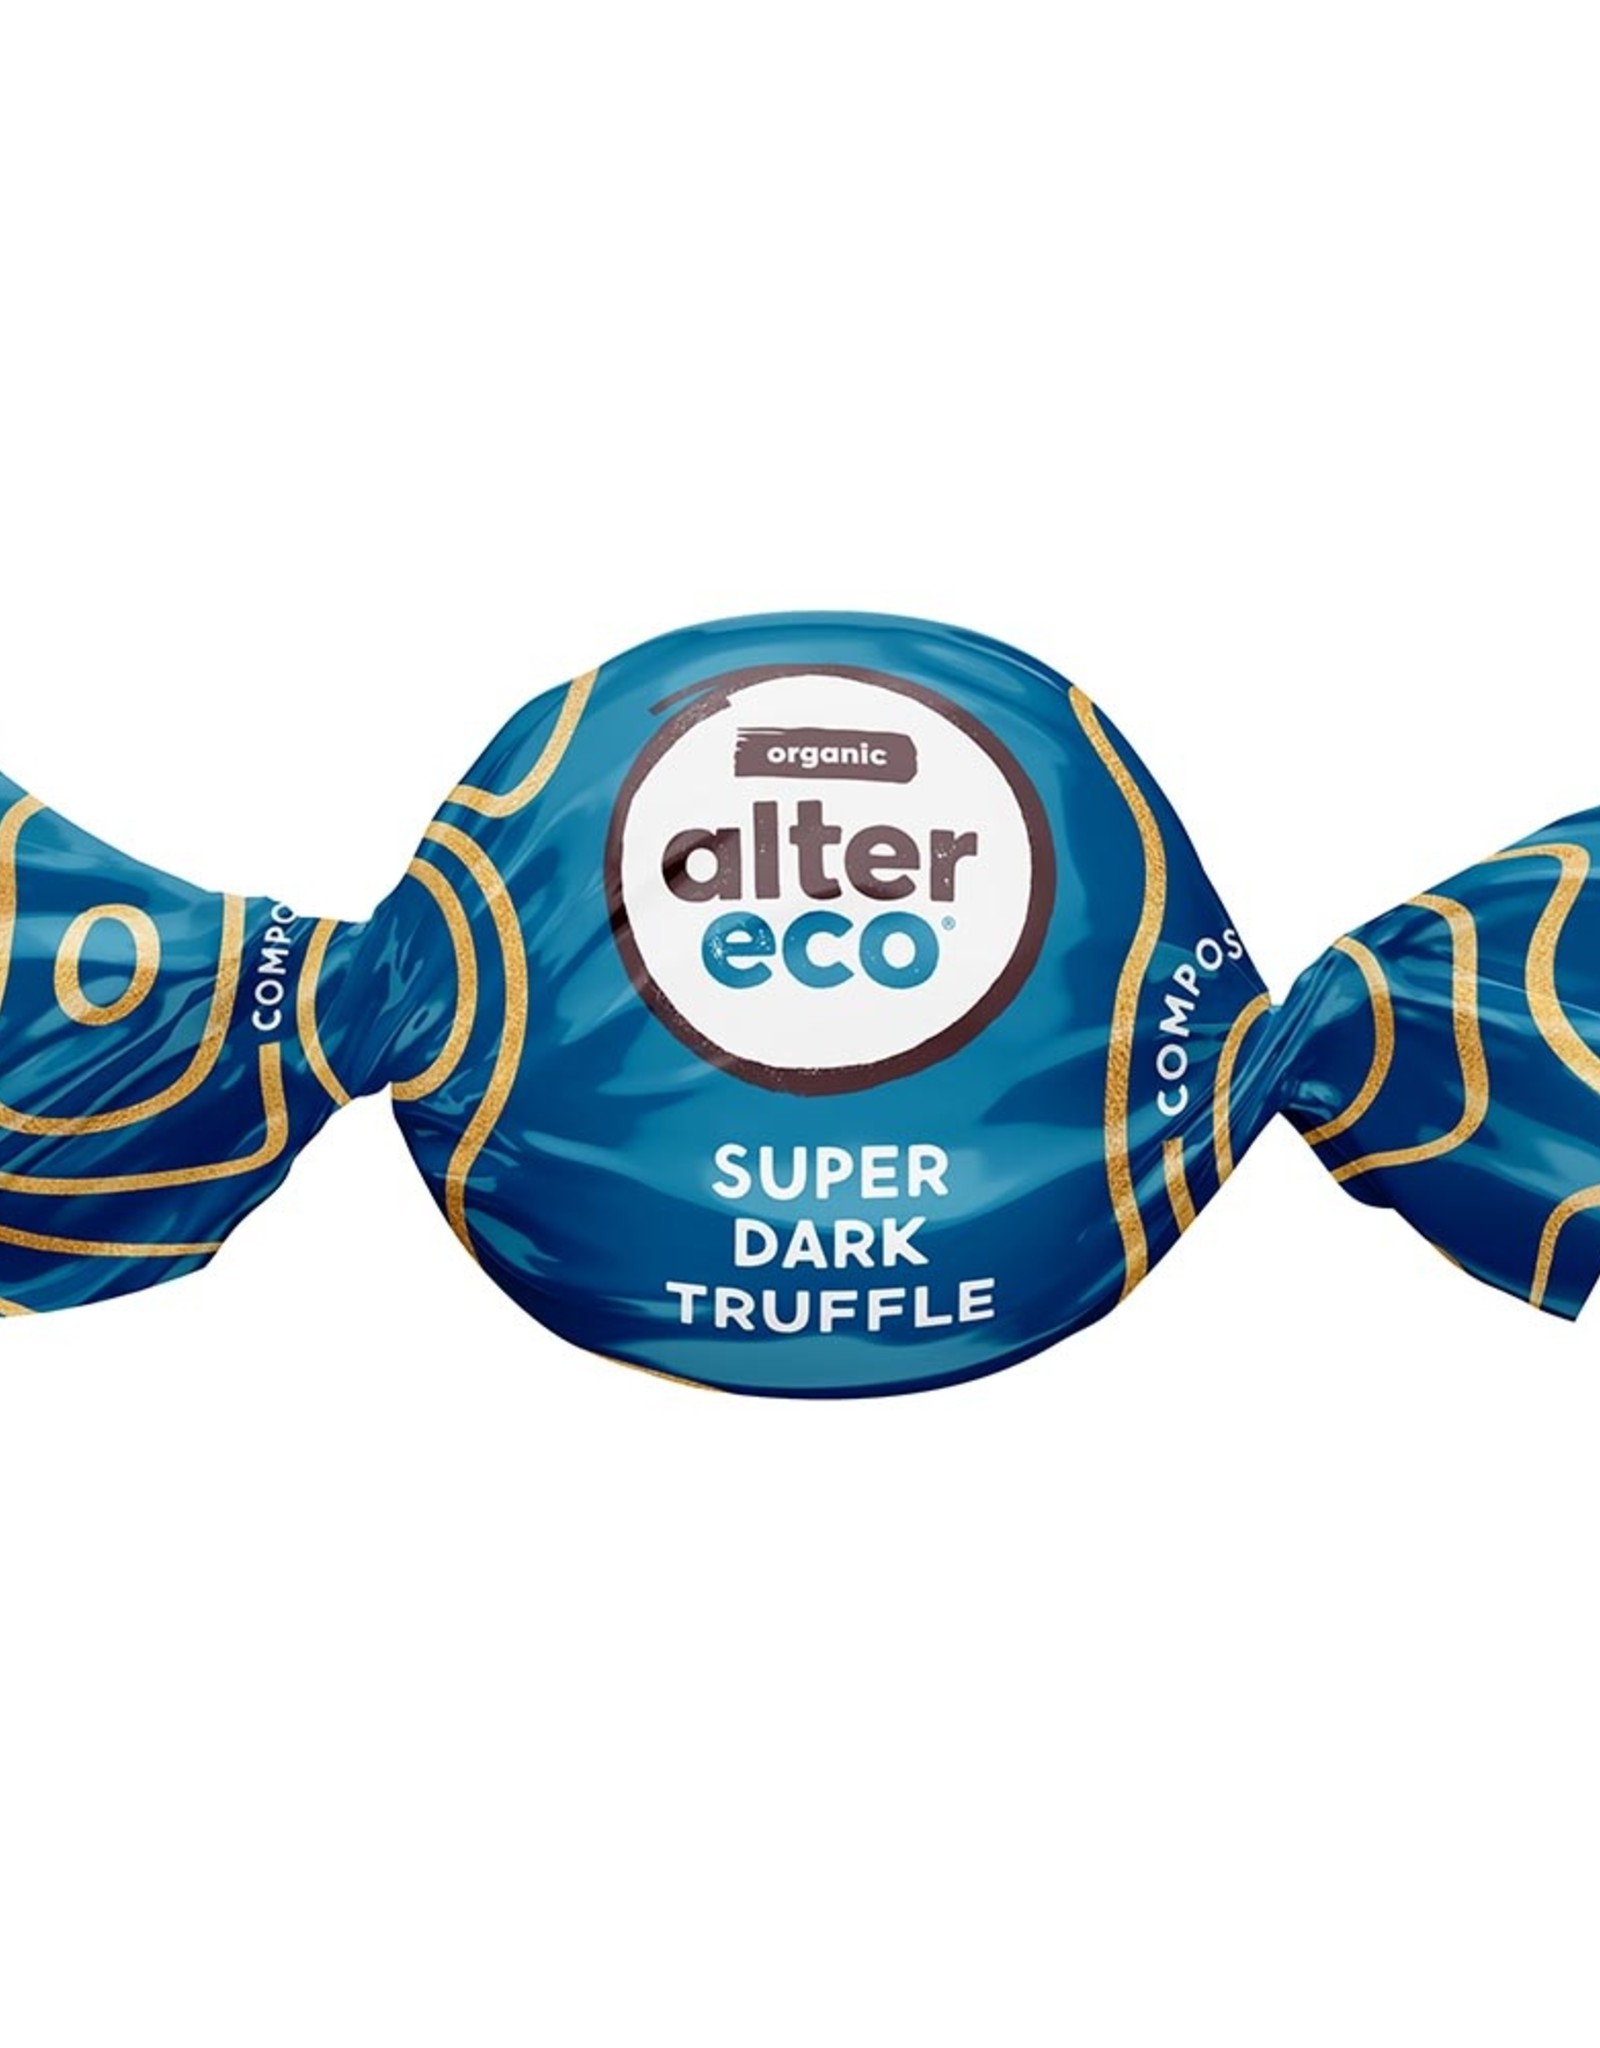 Alter Eco Alter Eco Truffle Superdark (single)